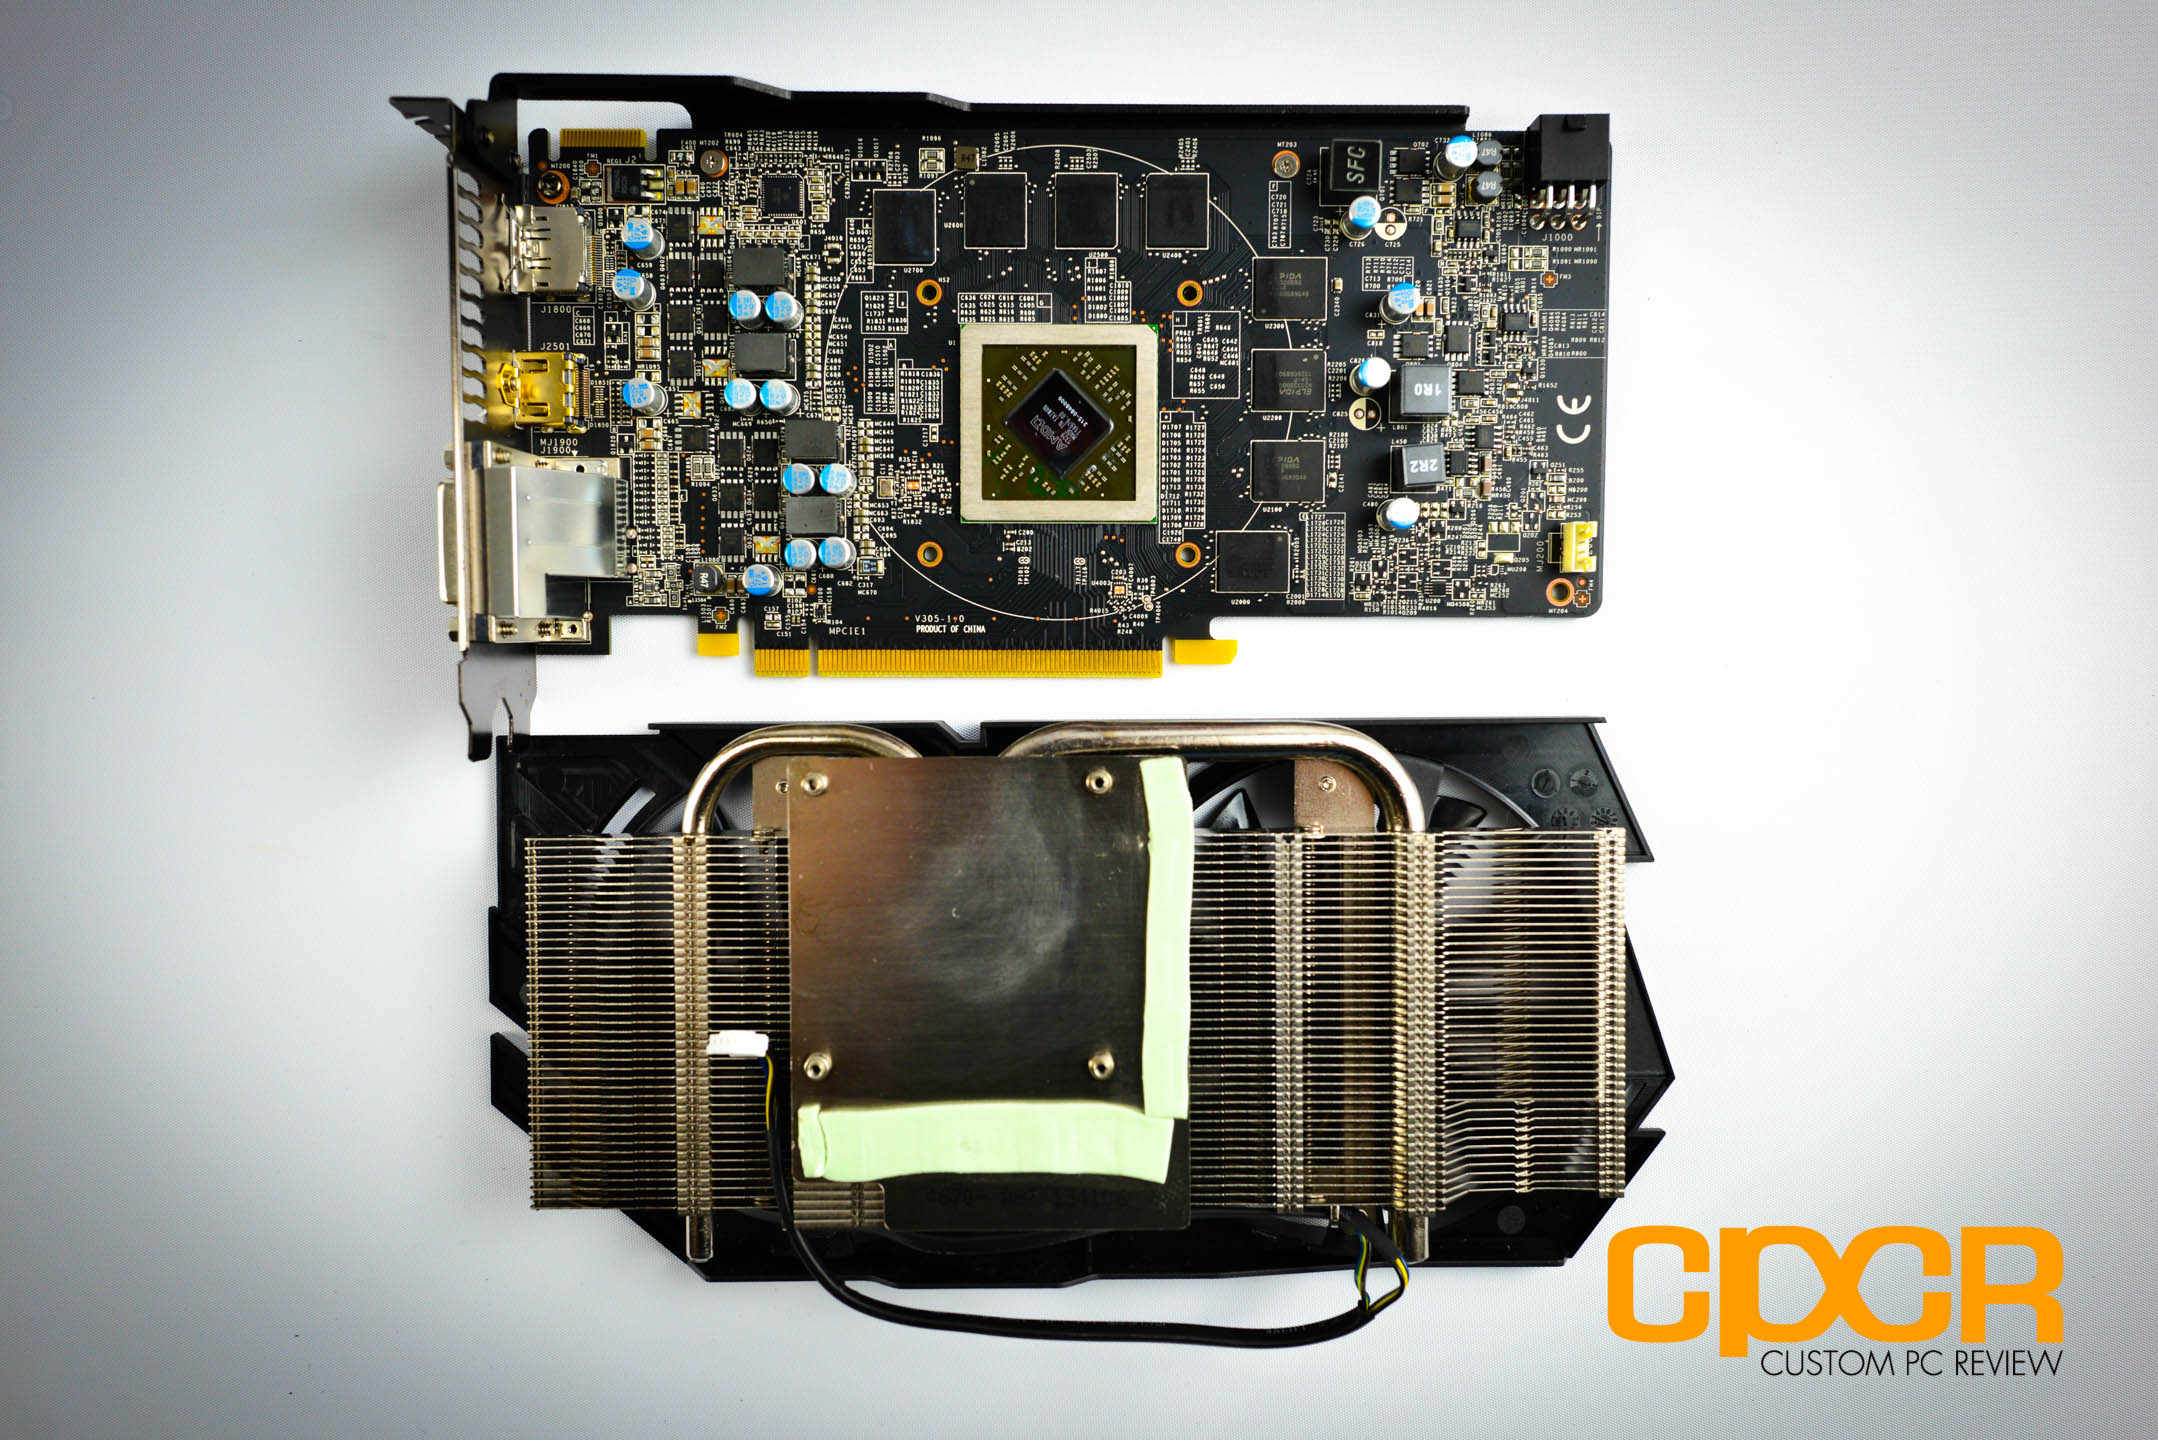 AMD Radeon R9 270X 2 GB Review - Sleeping Dogs